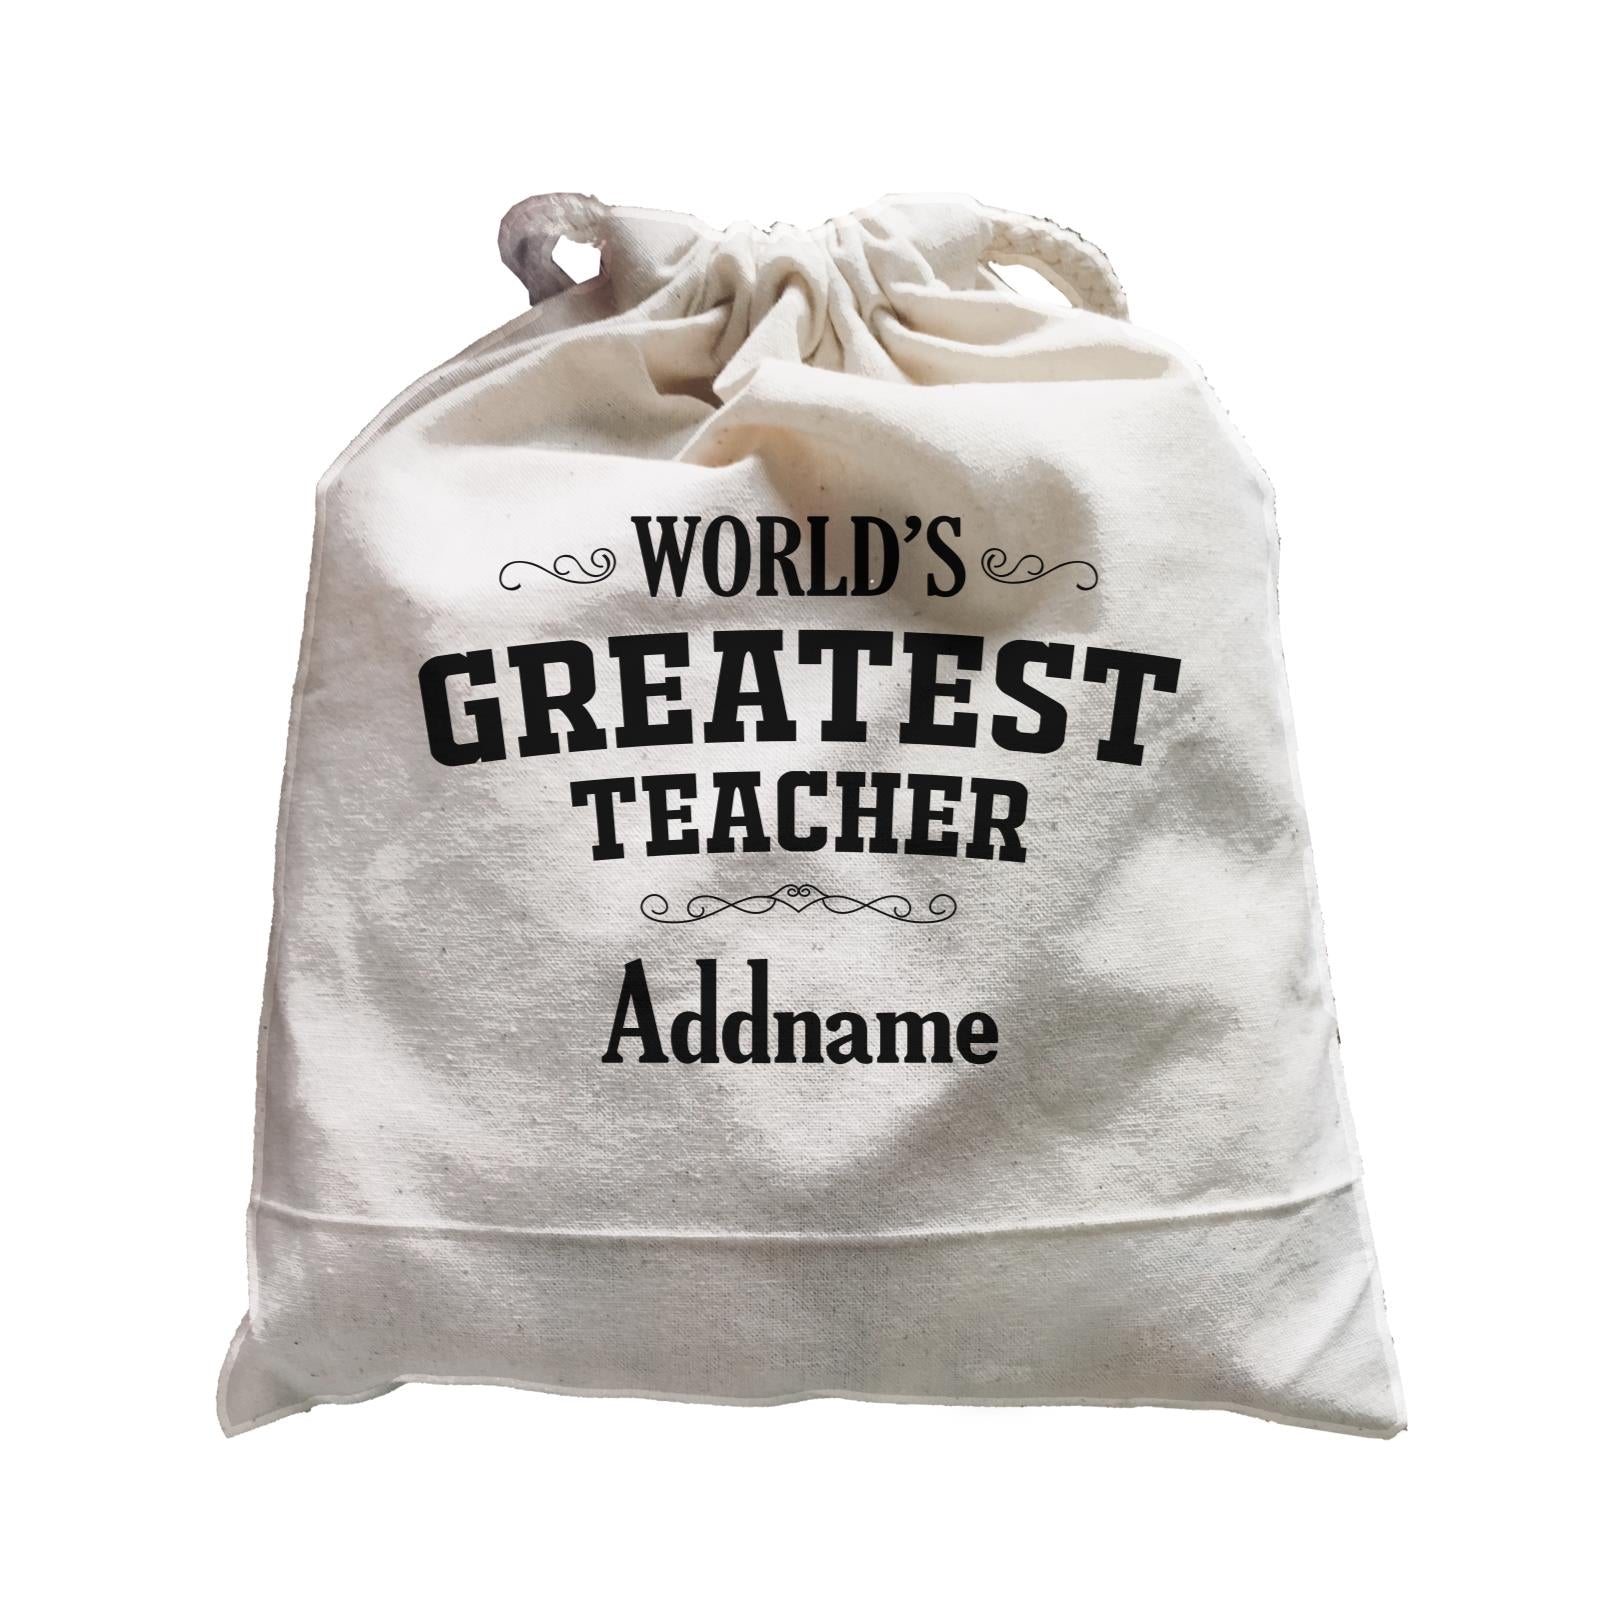 Great Teachers World's Greatest Teacher Addname Satchel